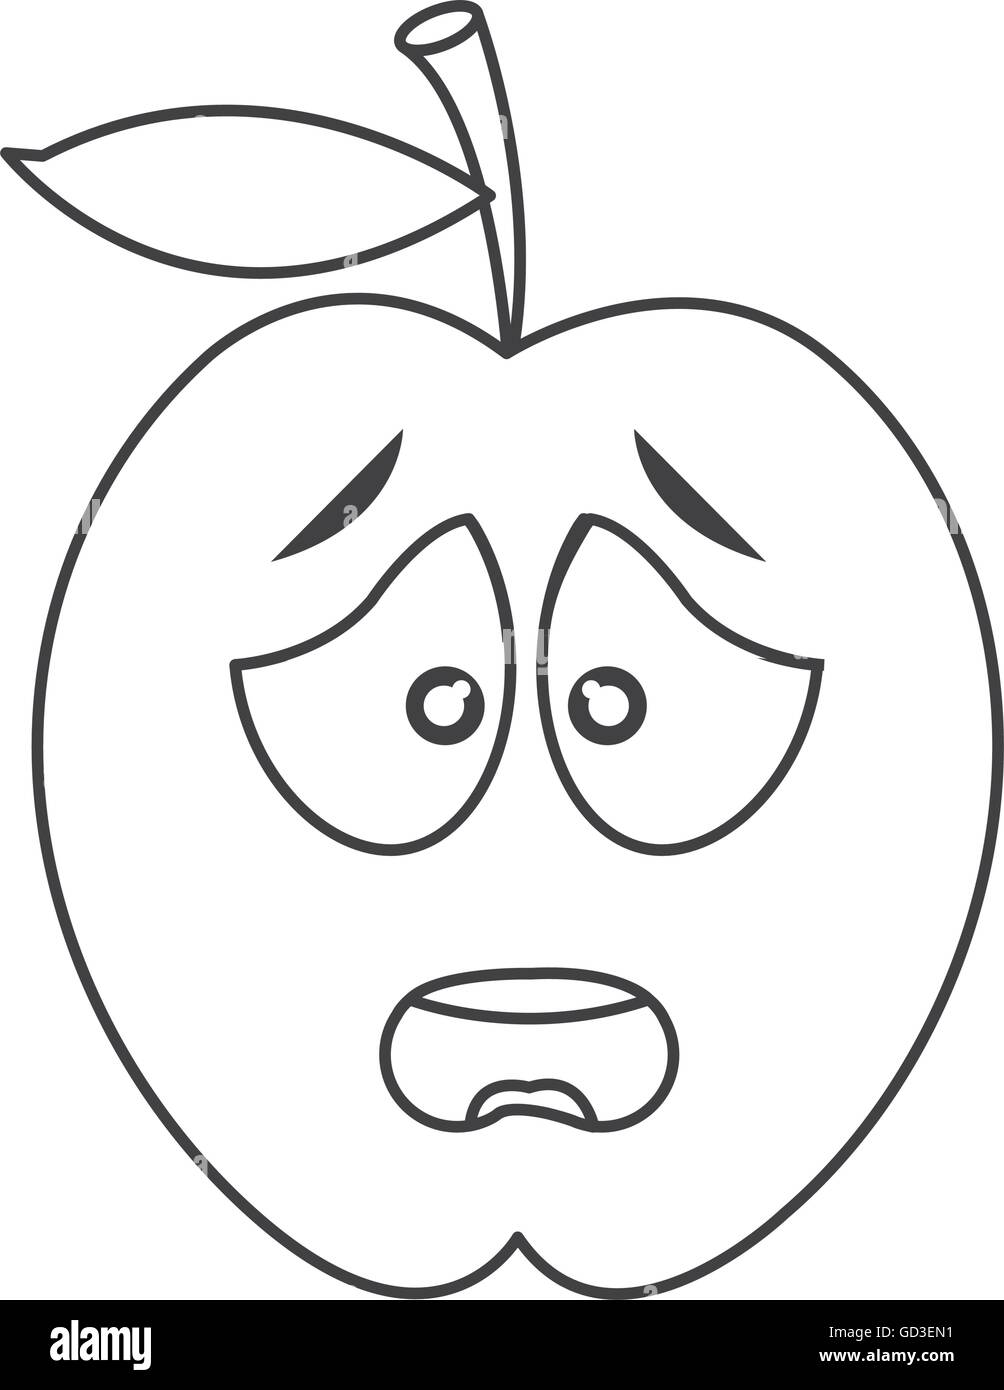 worried apple cartoon icon Stock Vector